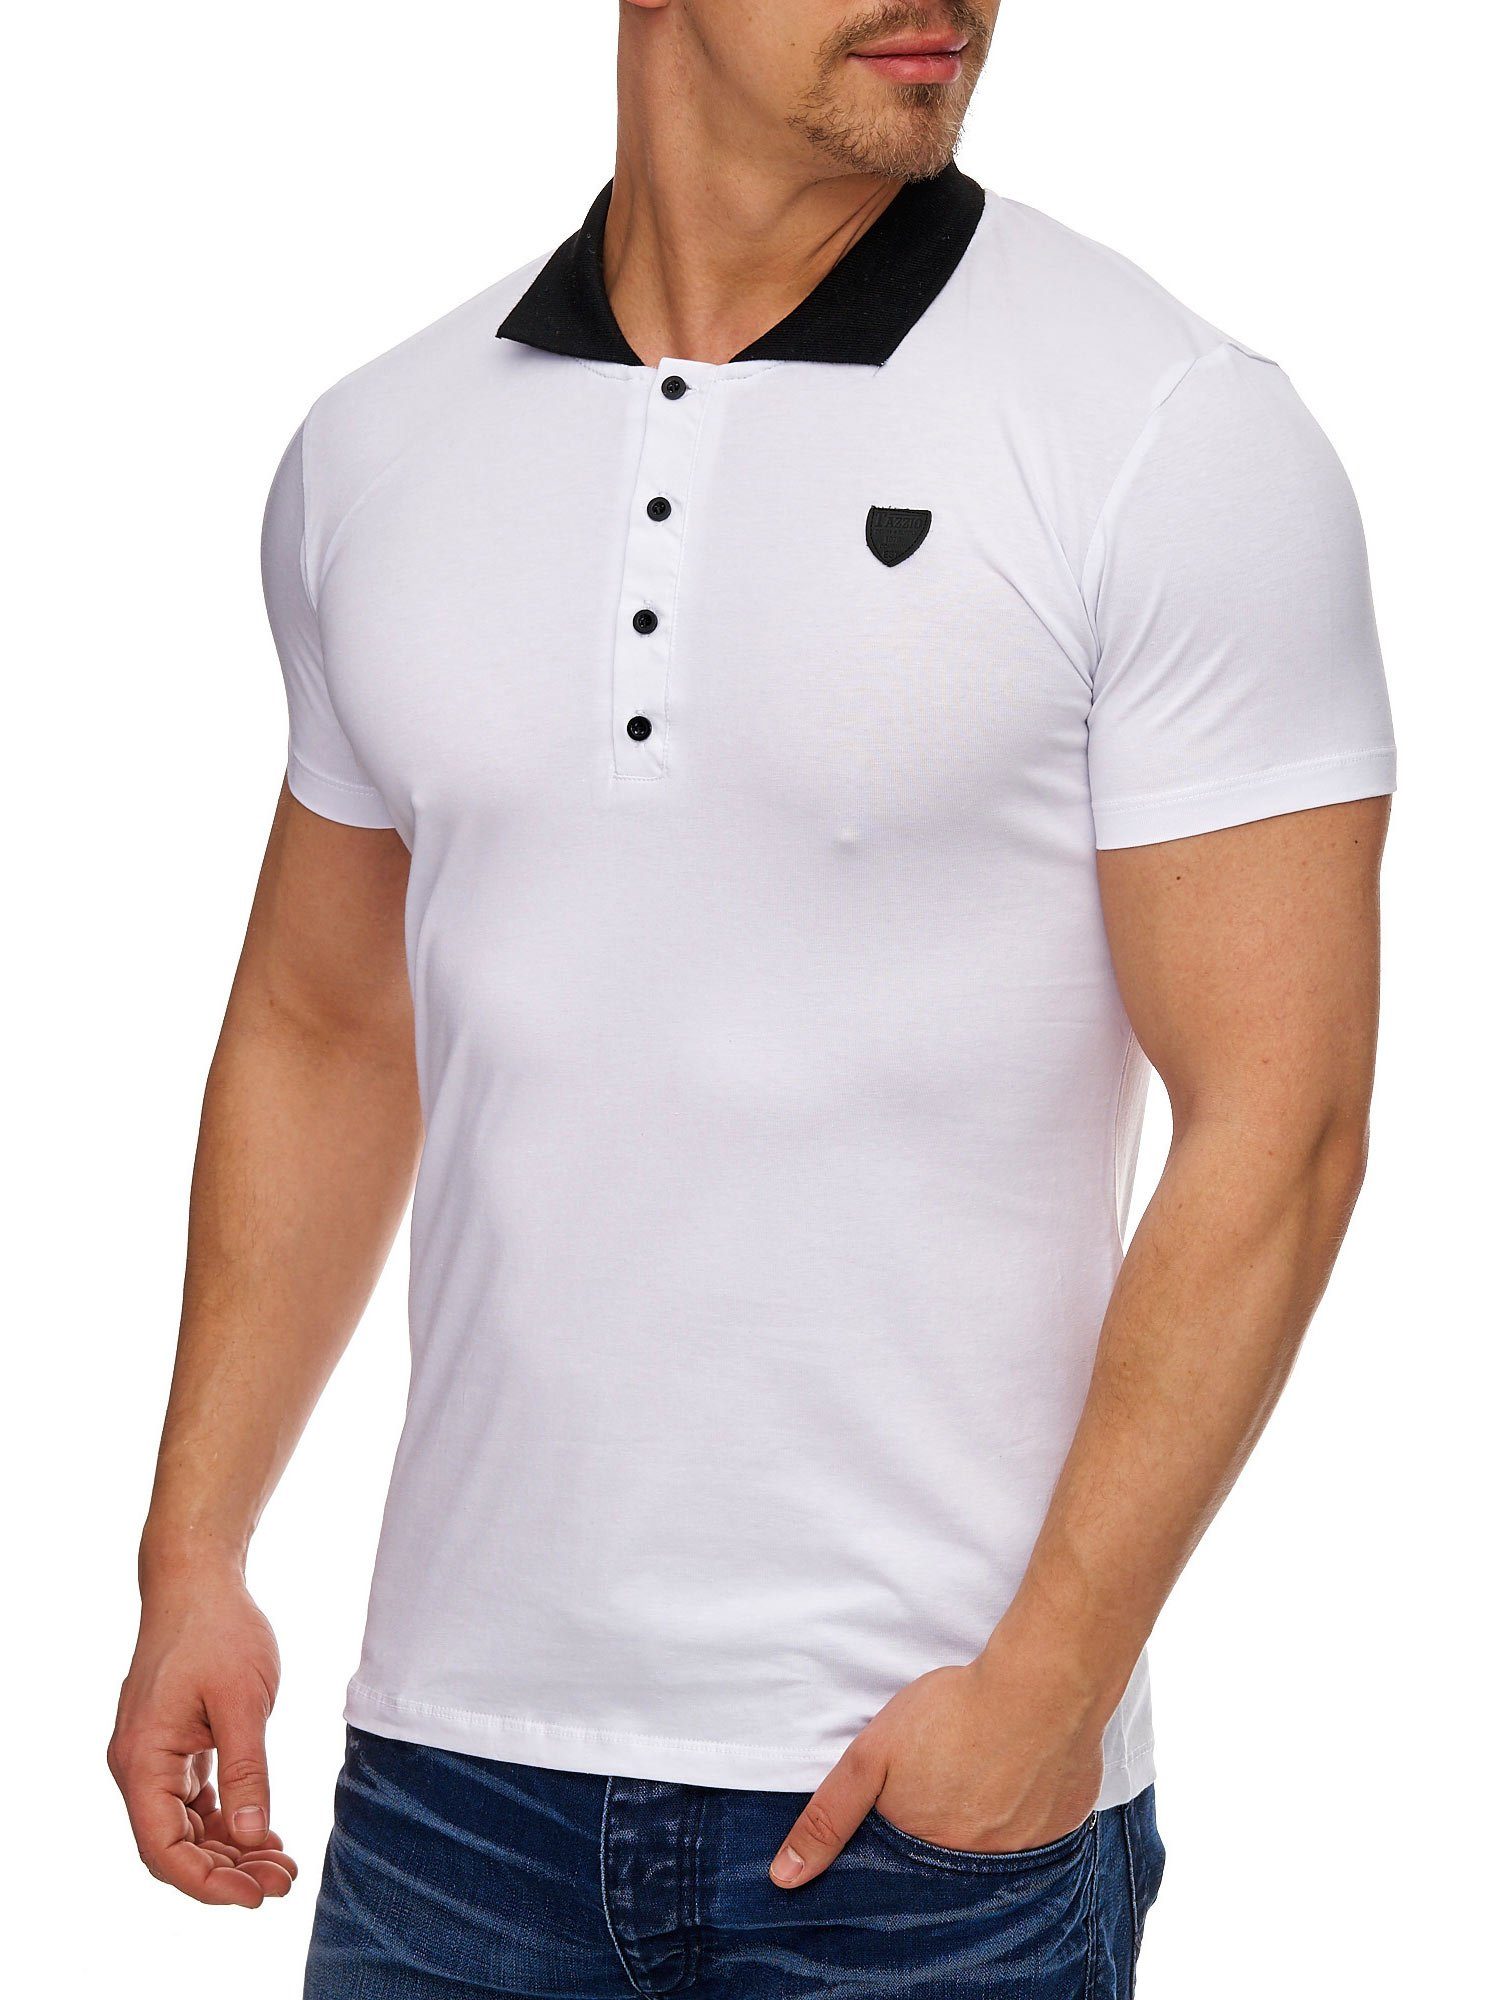 Tazzio Poloshirt 17101 zeitloses Polo Shirt weiß